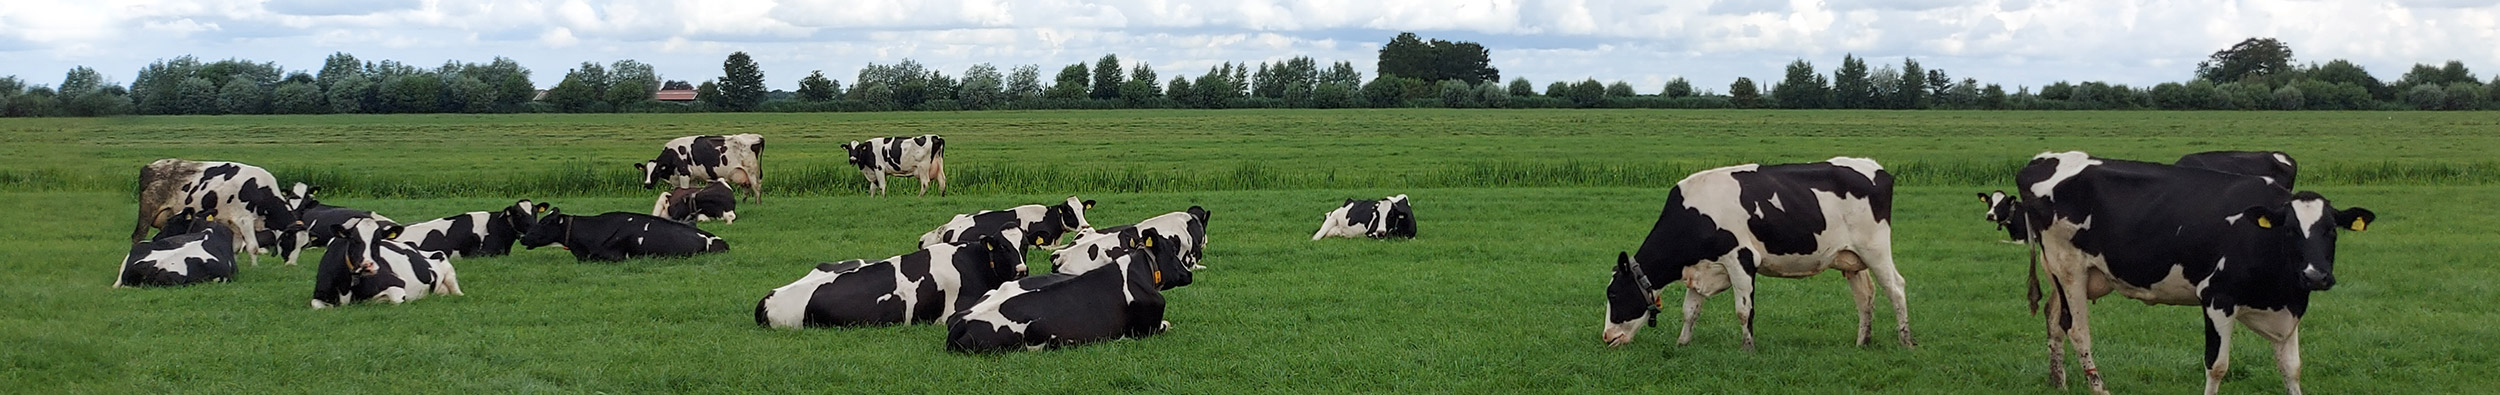 dairy cattle grazing in the field